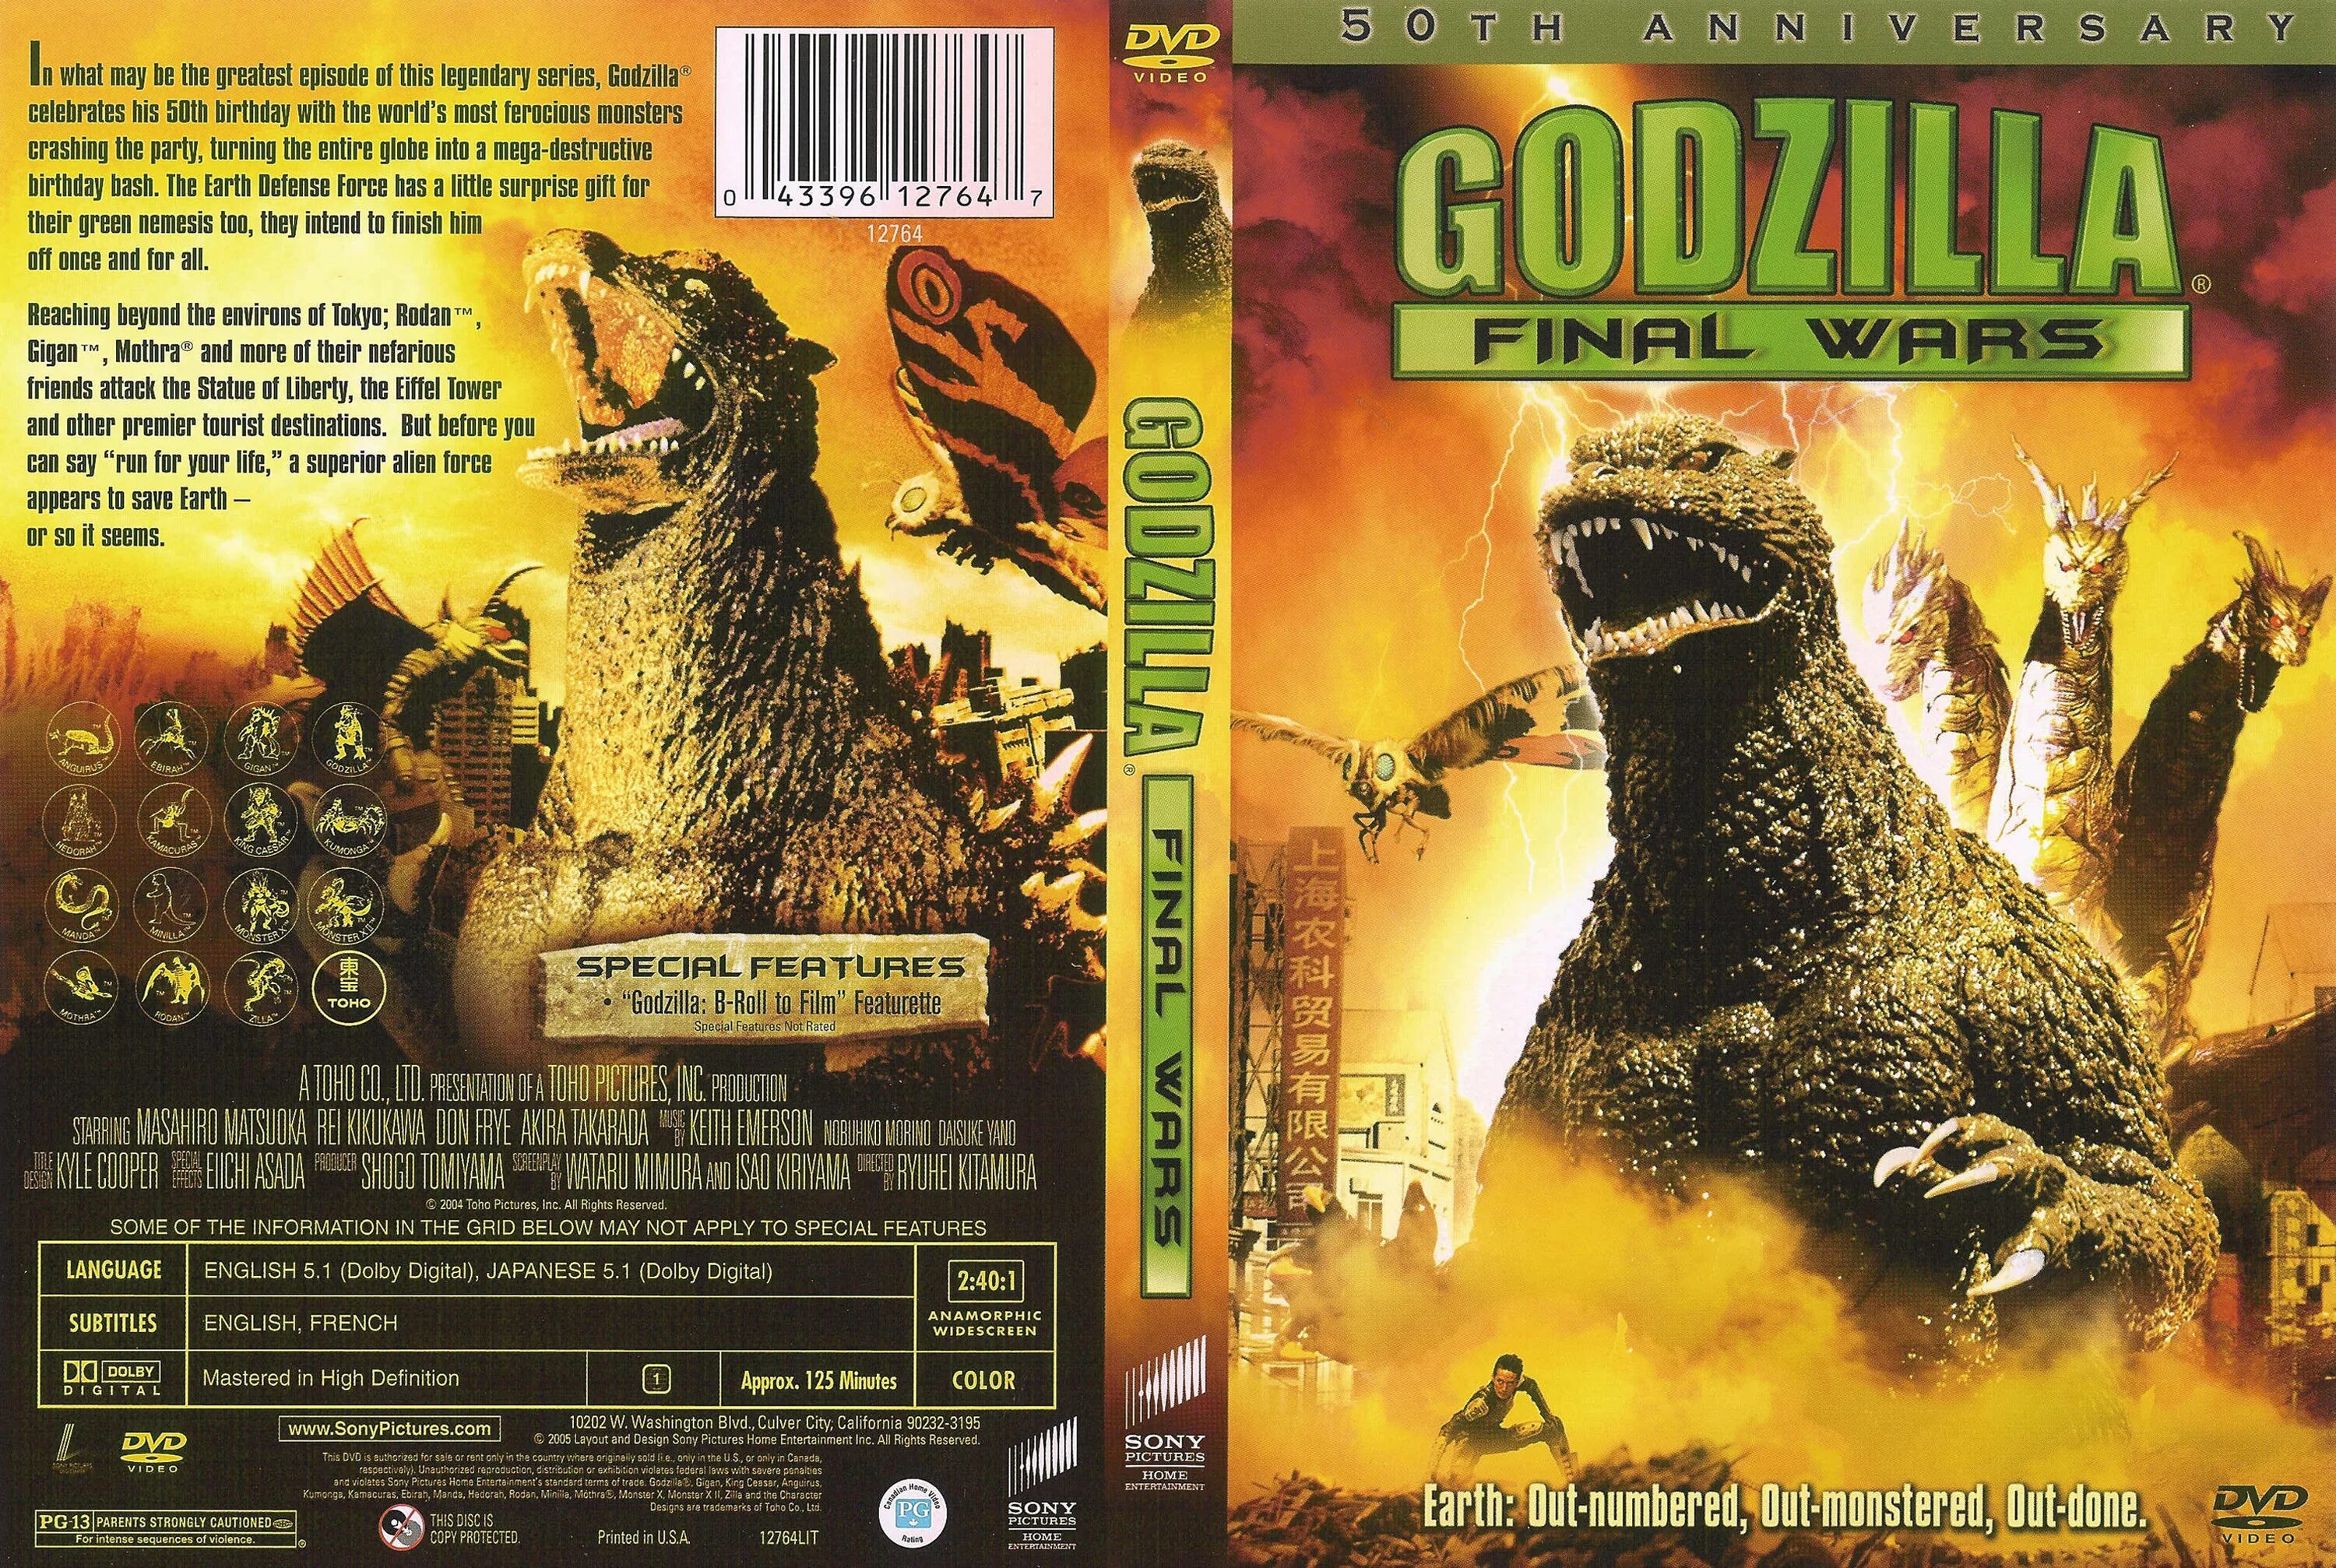 Godzilla final. Годзилла финальные войны 2004. Годзилла: финальные войны (2004) обложка. Годзилла финальные войны DVD. Годзилла: финальные войны 2004 DVD.